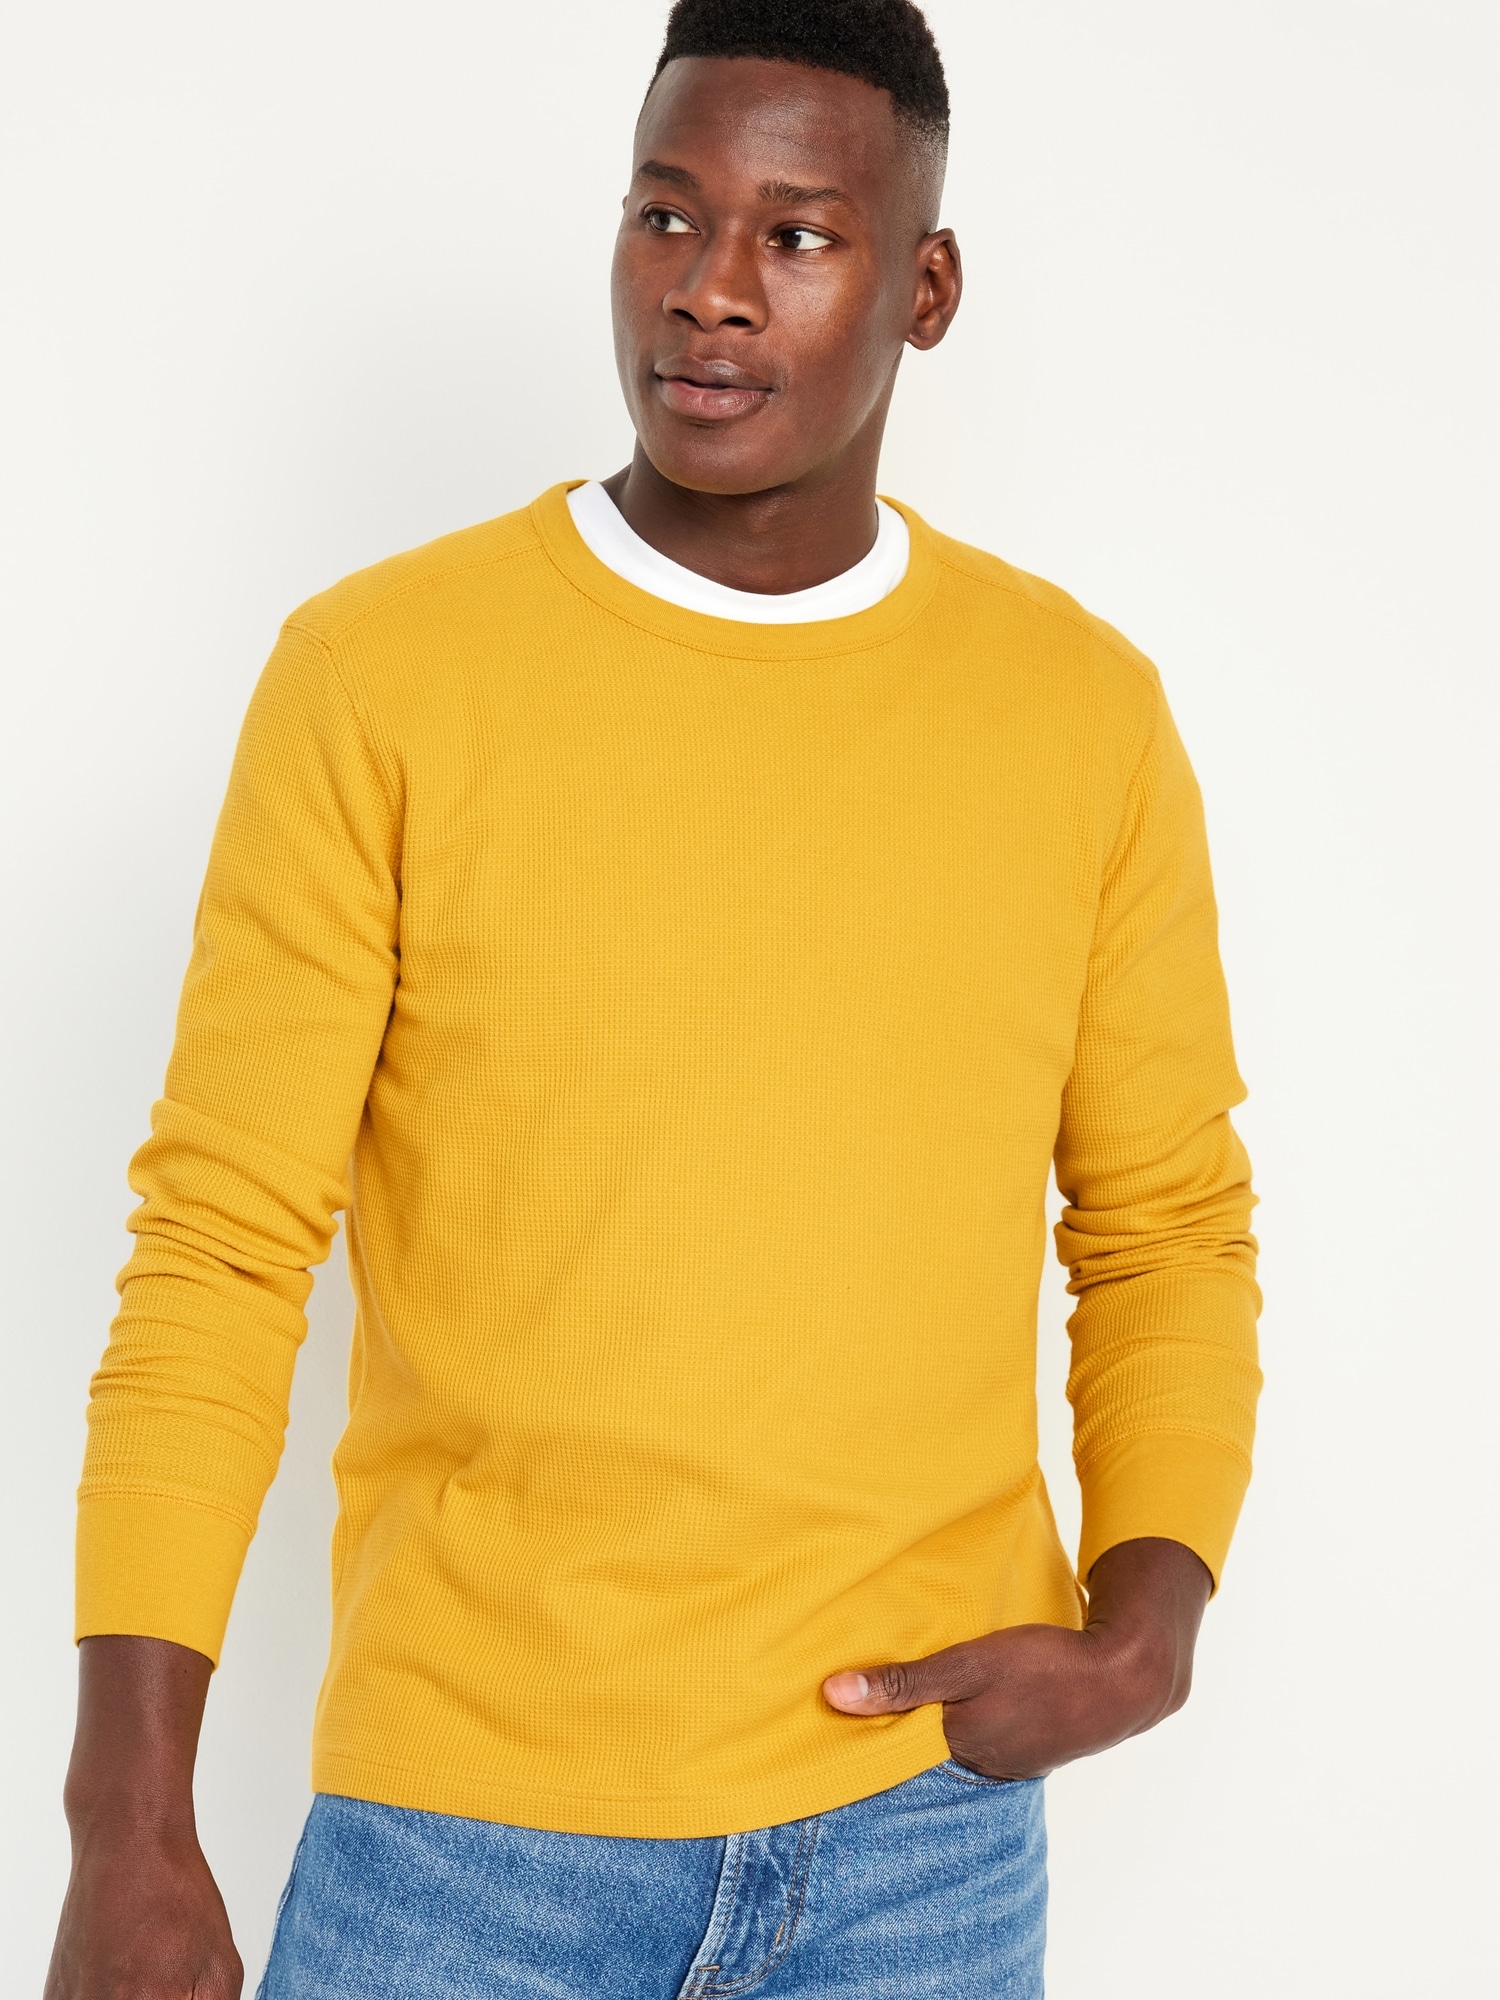 Long-Sleeve Built-In Flex Waffle-Knit T-Shirt for Men